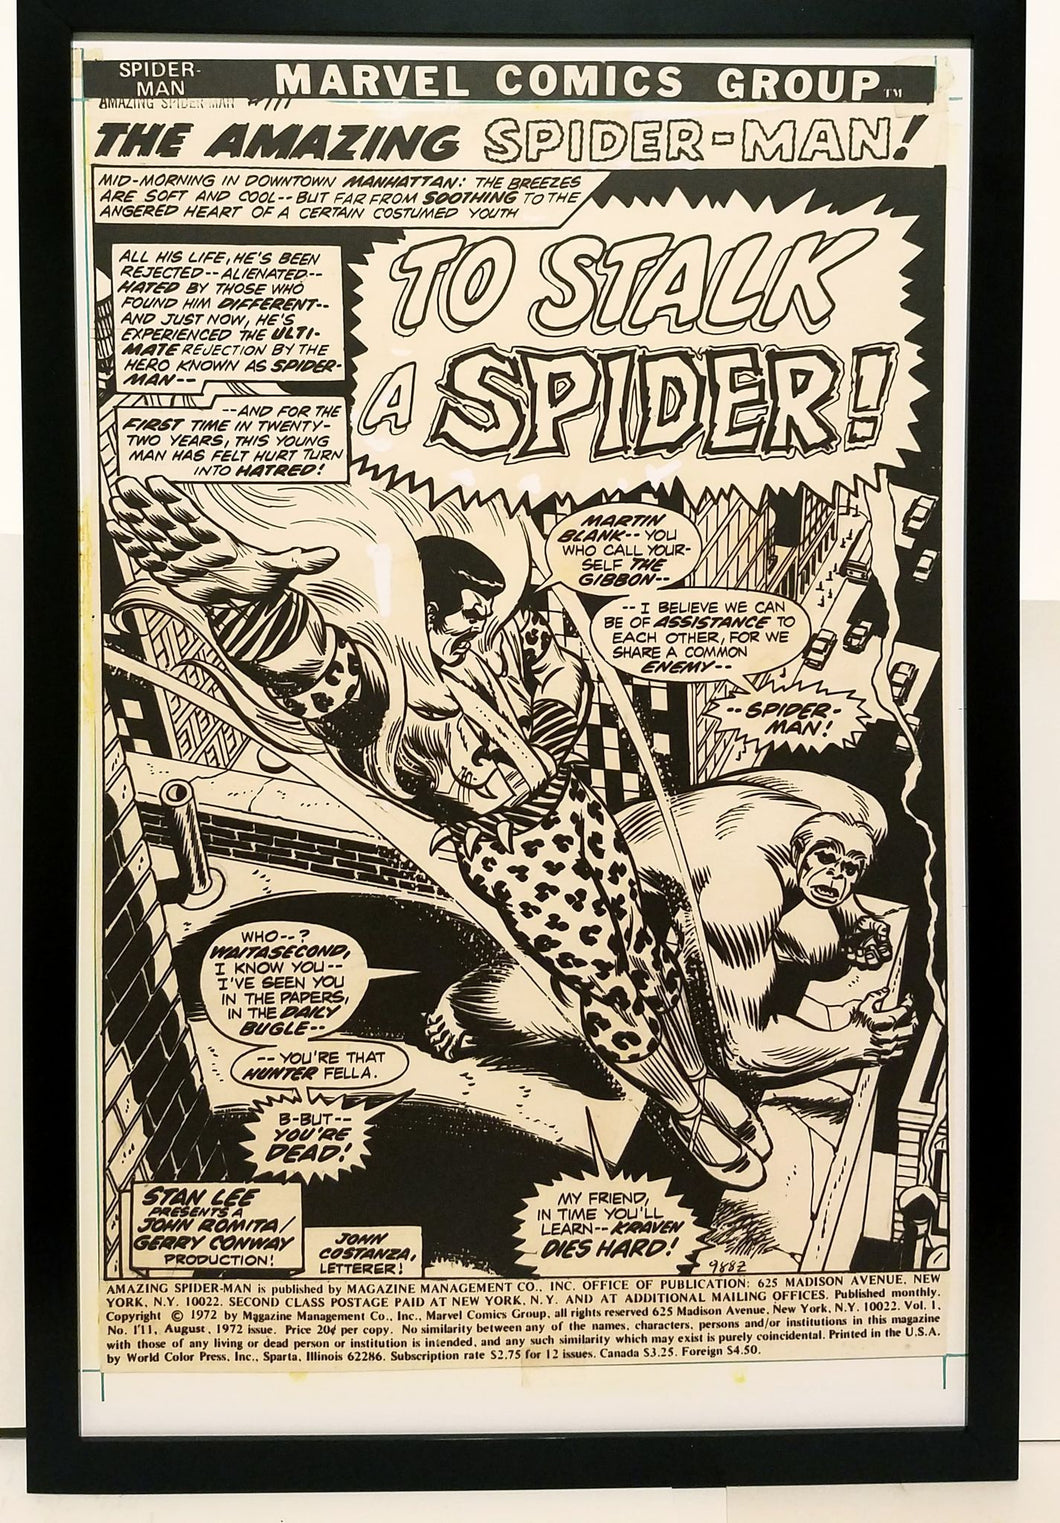 Amazing Spider-Man #111 pg. 1 John Romita 11x17 FRAMED Original Art Poster Marvel Comics